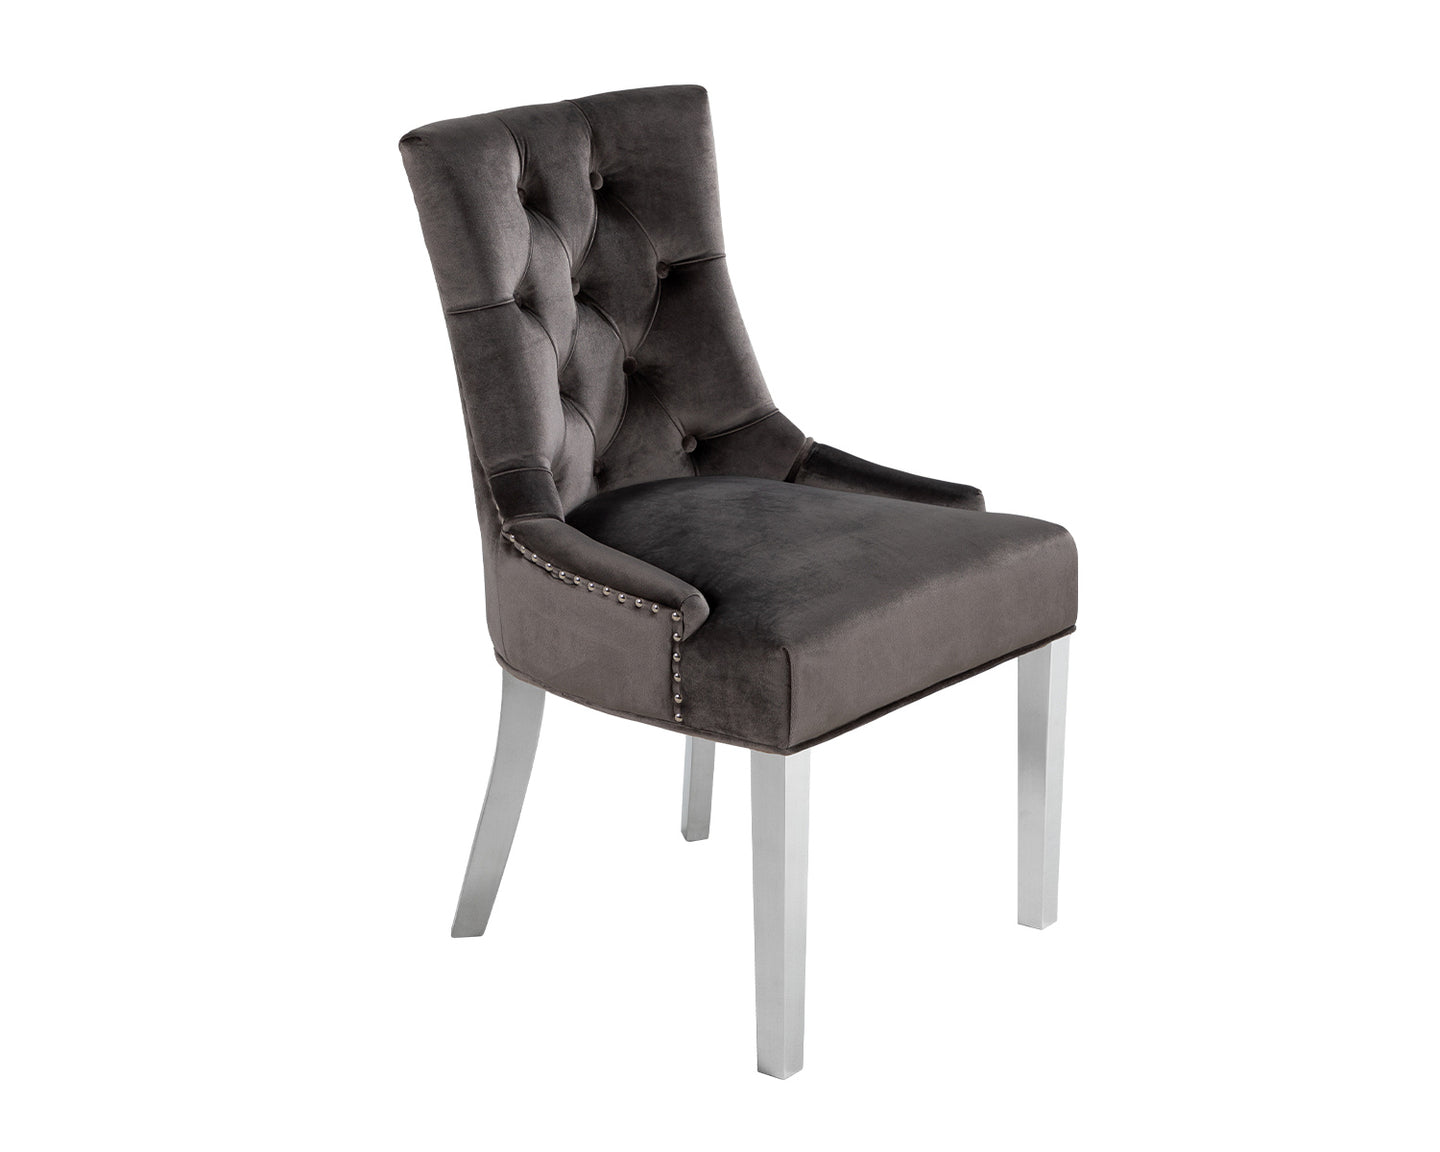 Verona Dining Chair in Grey Velvet with Chrome Knocker and Chrome Legs